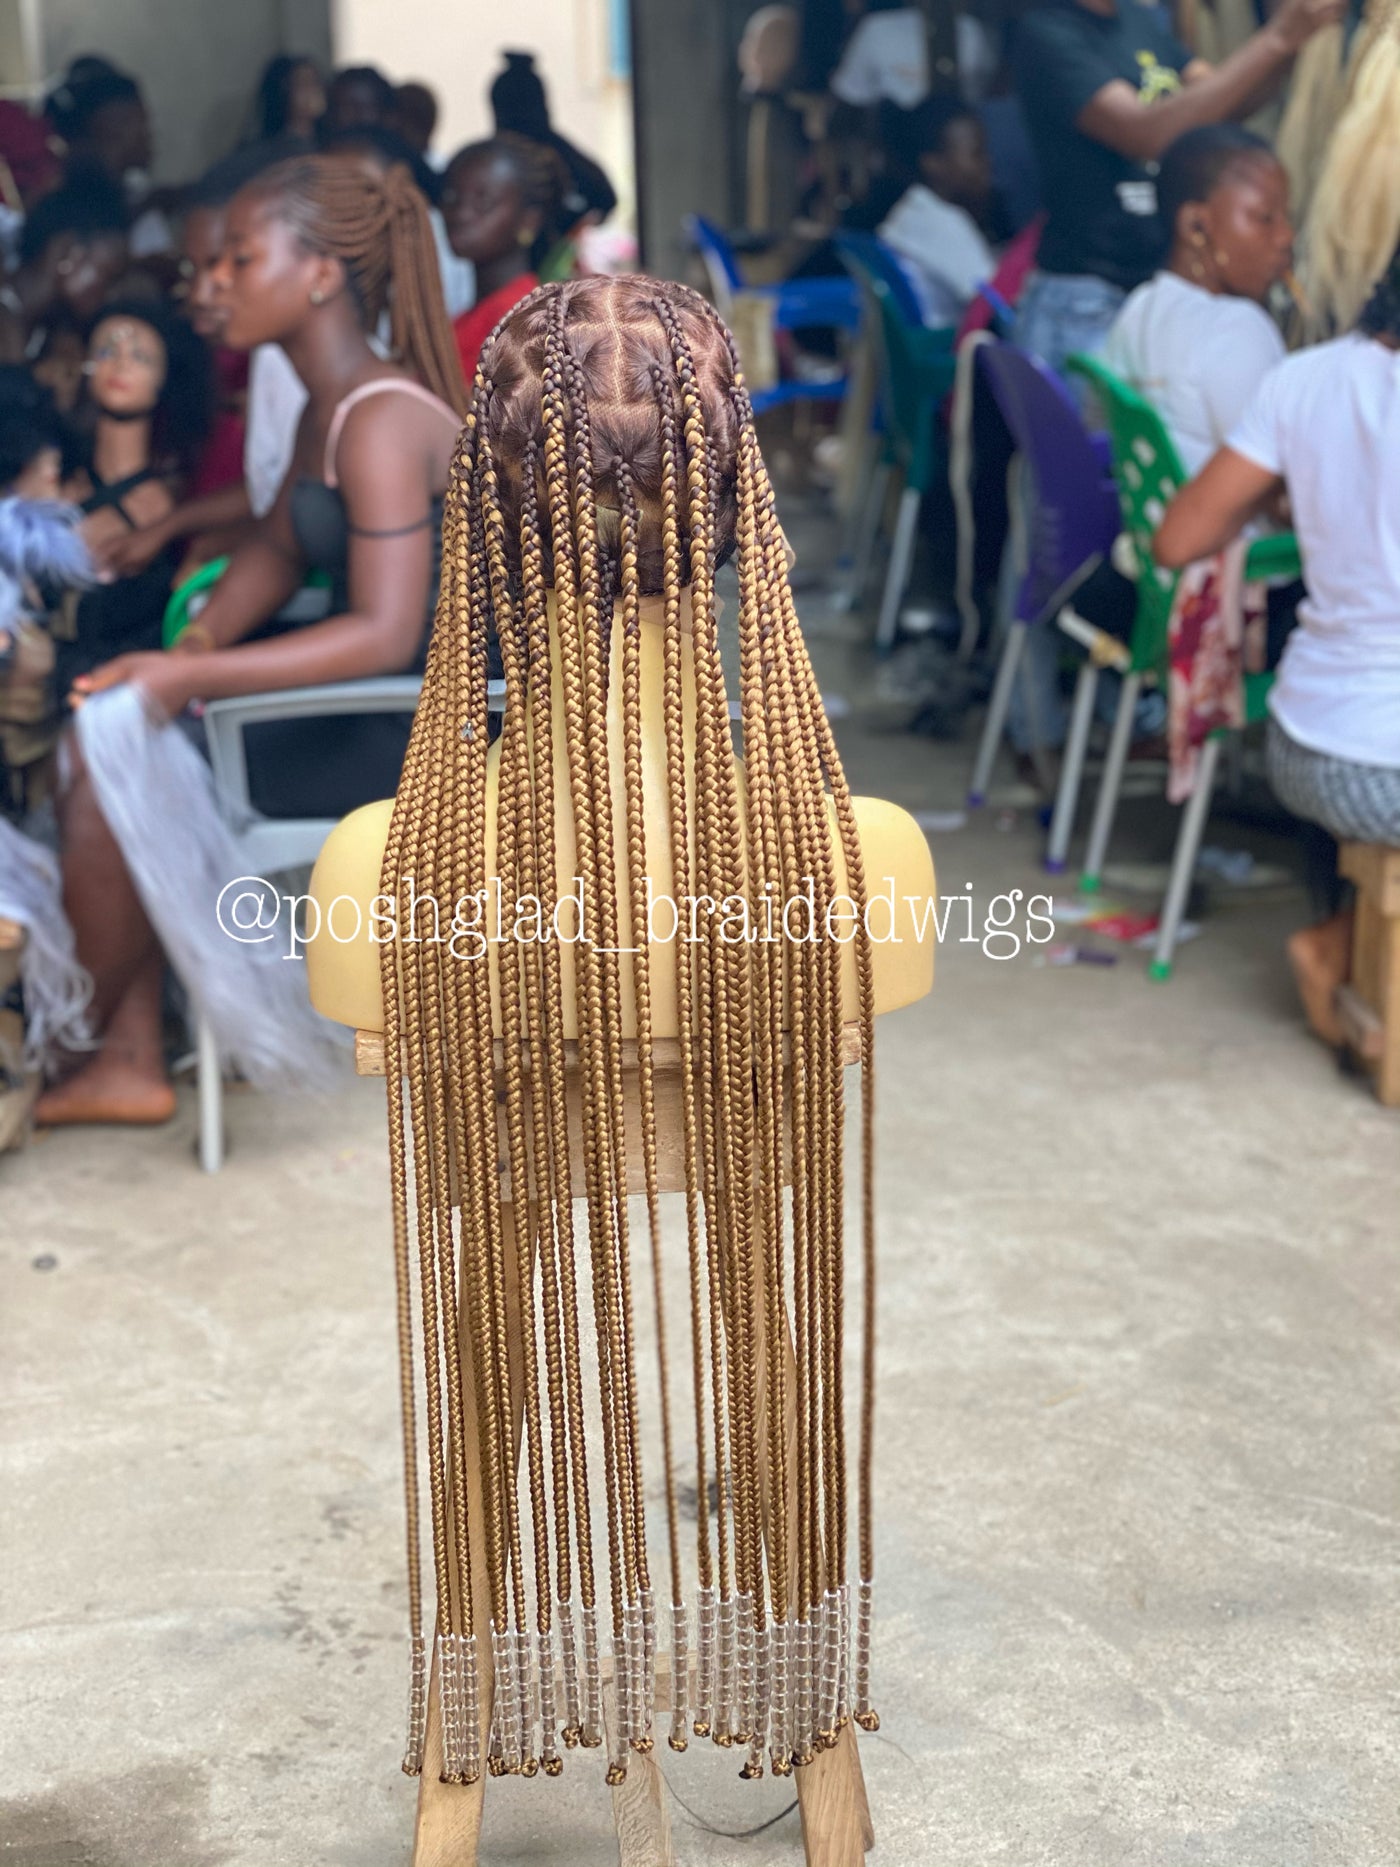 Large Knotless Braid With Beads - Kelani Poshglad Braided Wigs Large knotless braid with beads